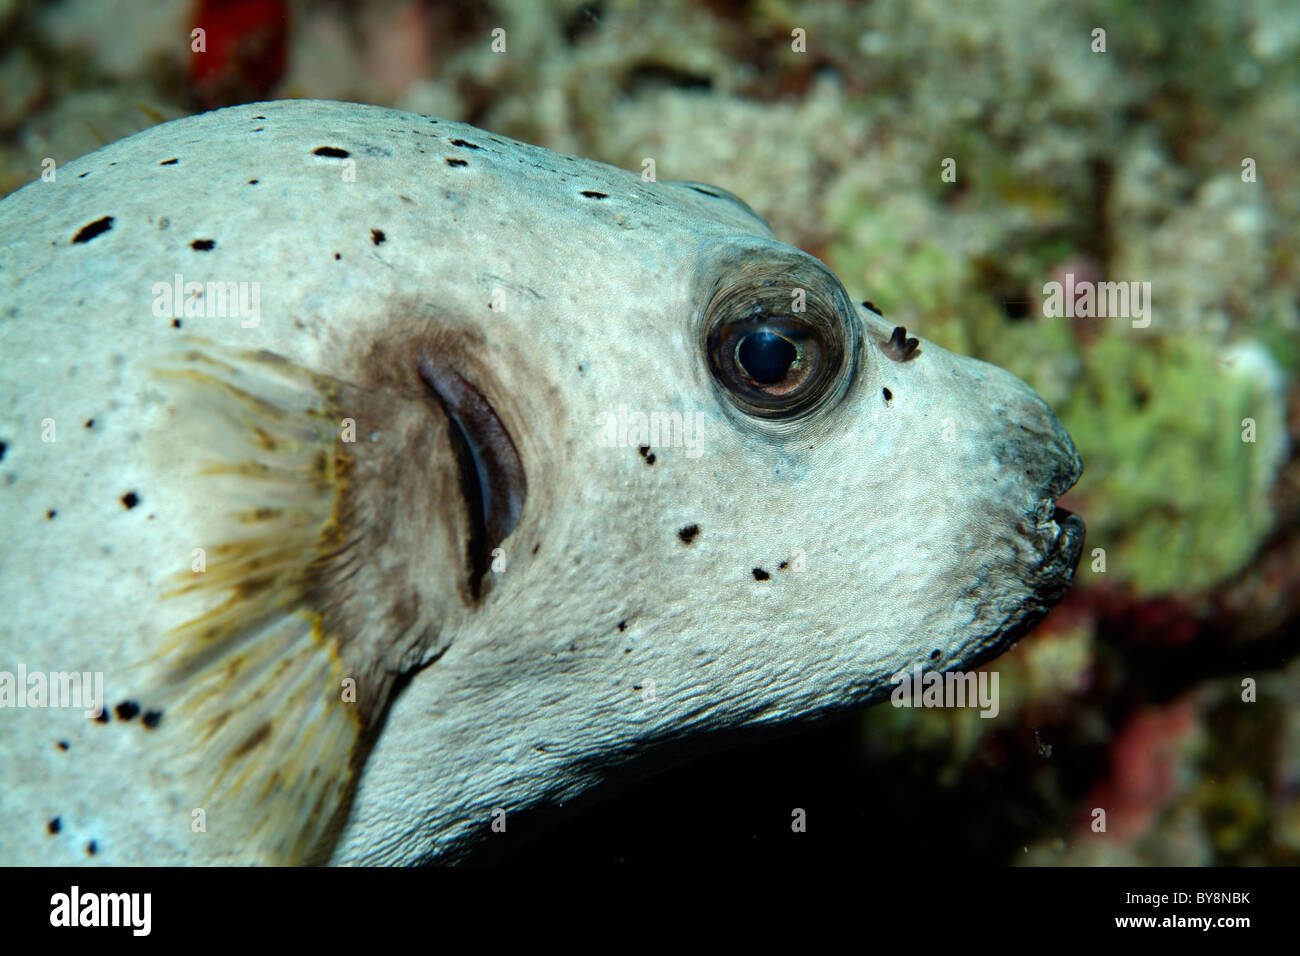 Blackspotted Puffer Fish or Dog-faced Puffer (Arothron nigropunctatus) Stock Photo